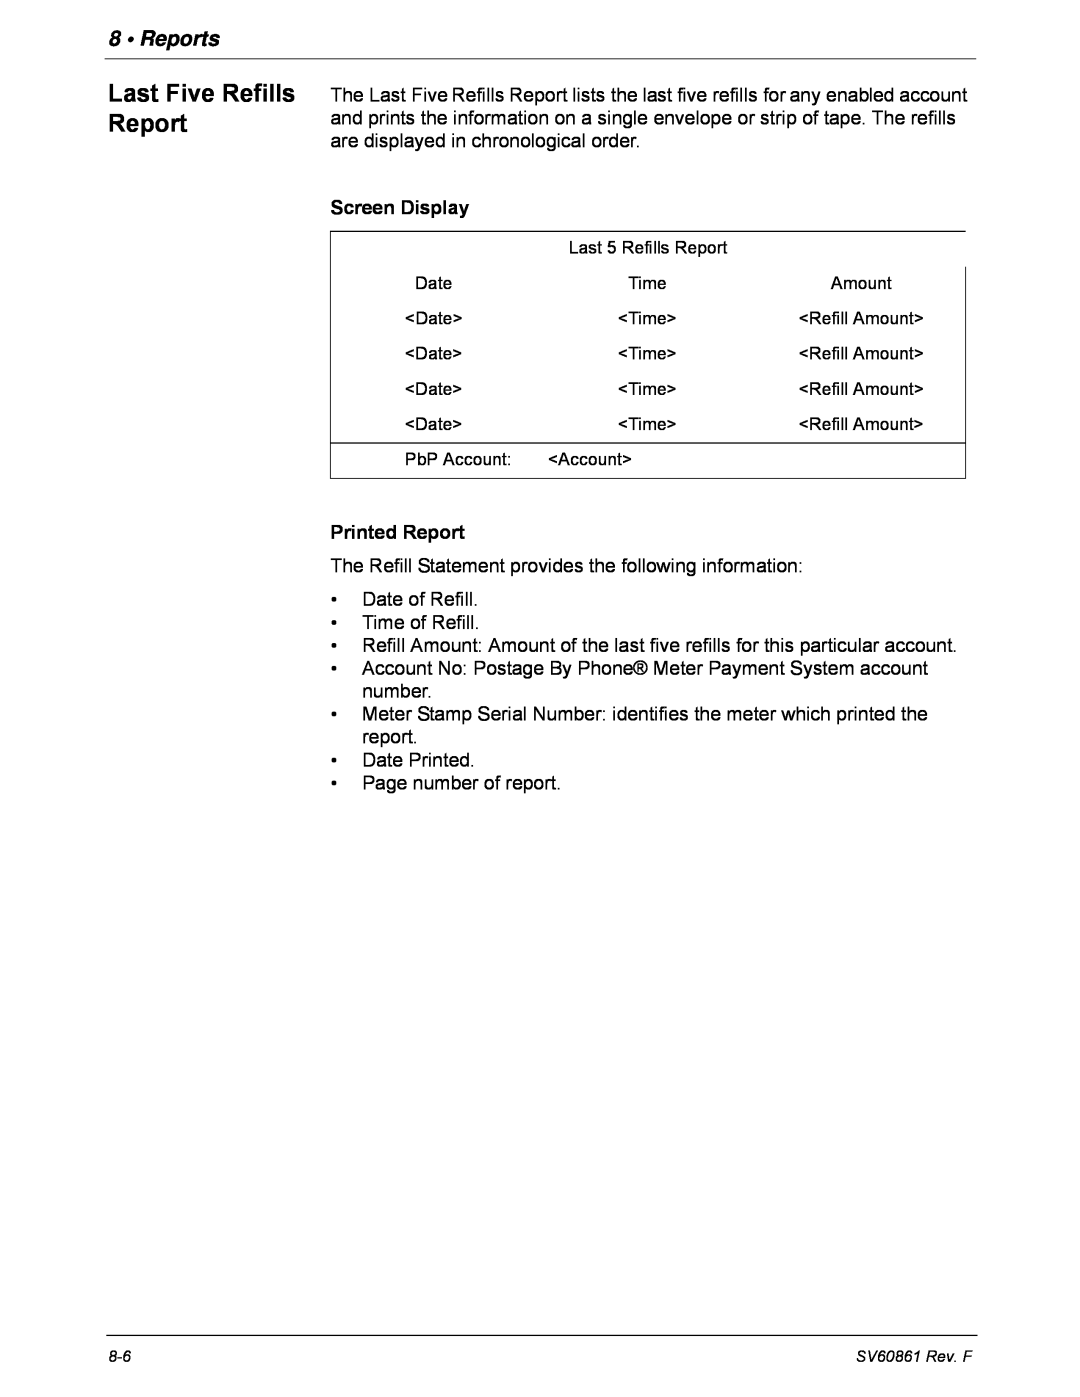 Pitney Bowes DM900, DM800 manual Last Five Refills Report, Reports, Screen Display, Printed Report 